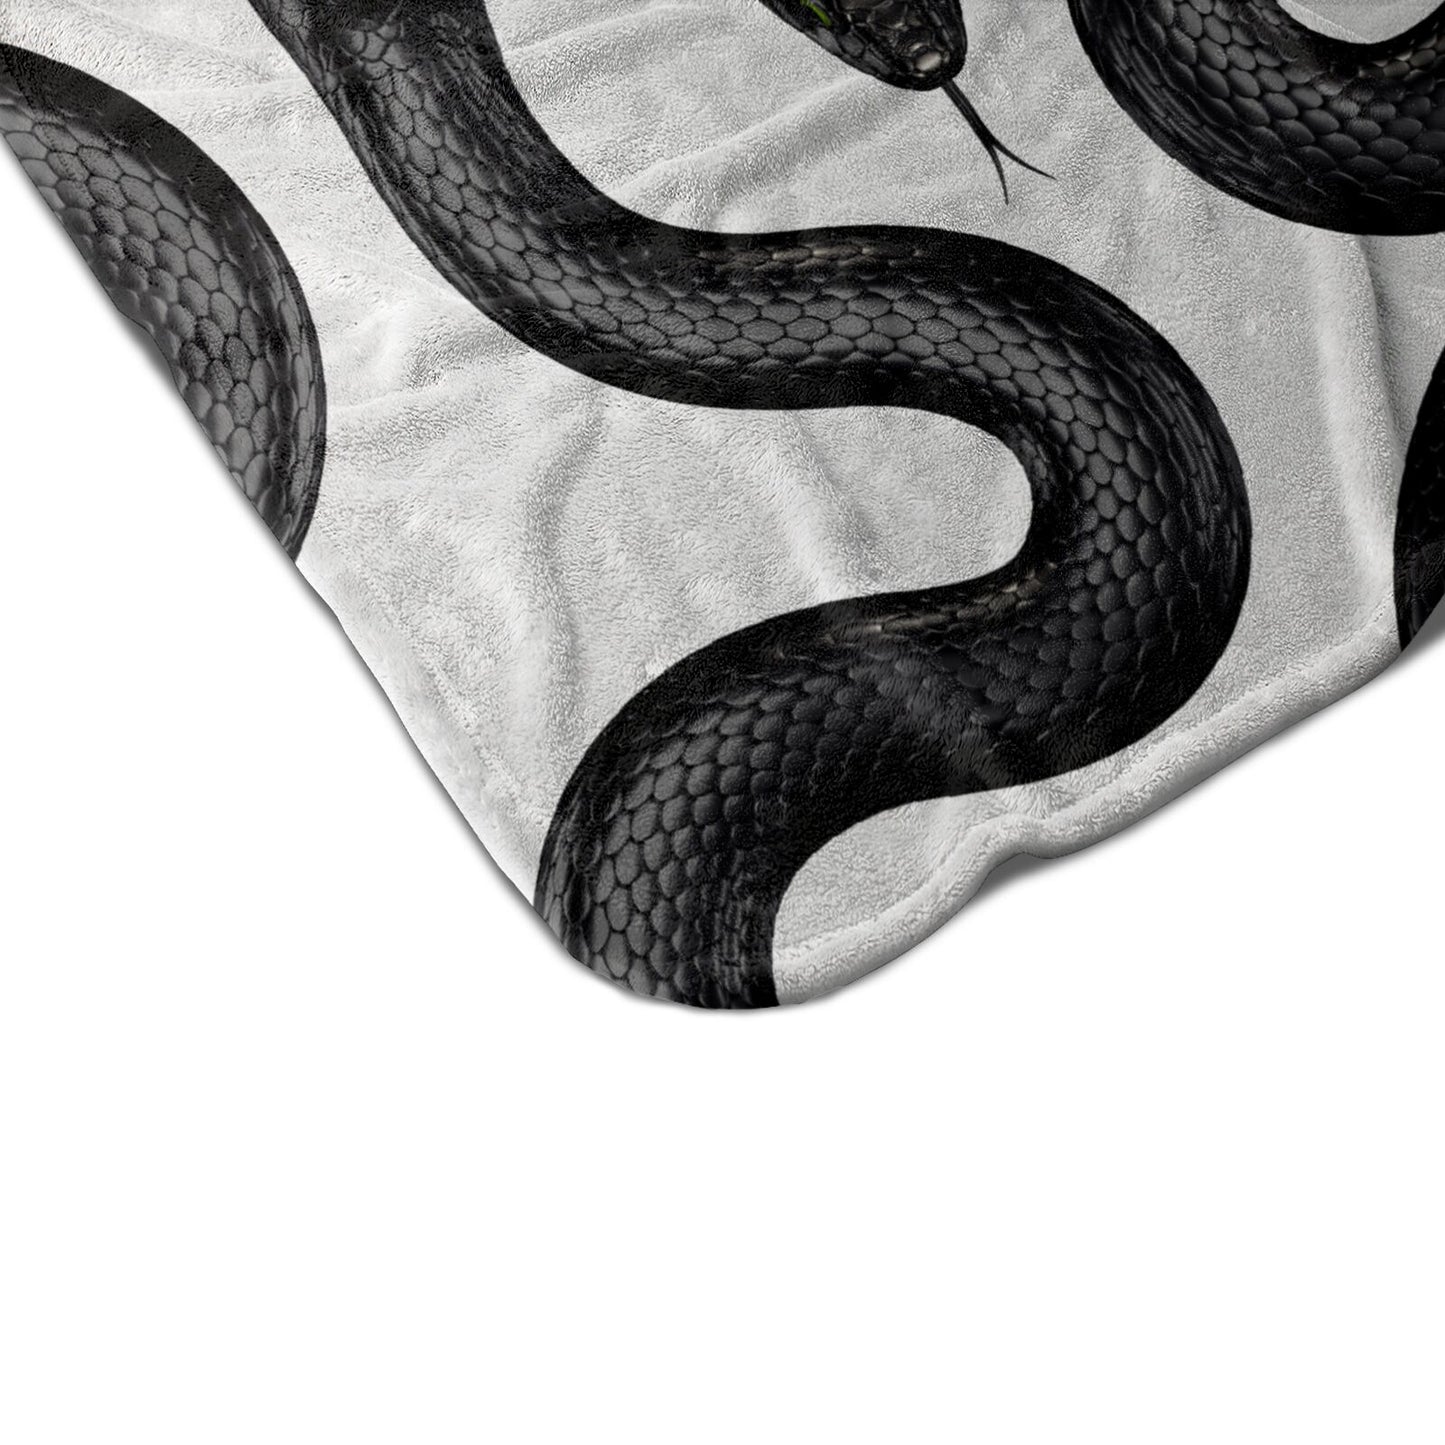 Snake Skin Pattern by Calista Puspita